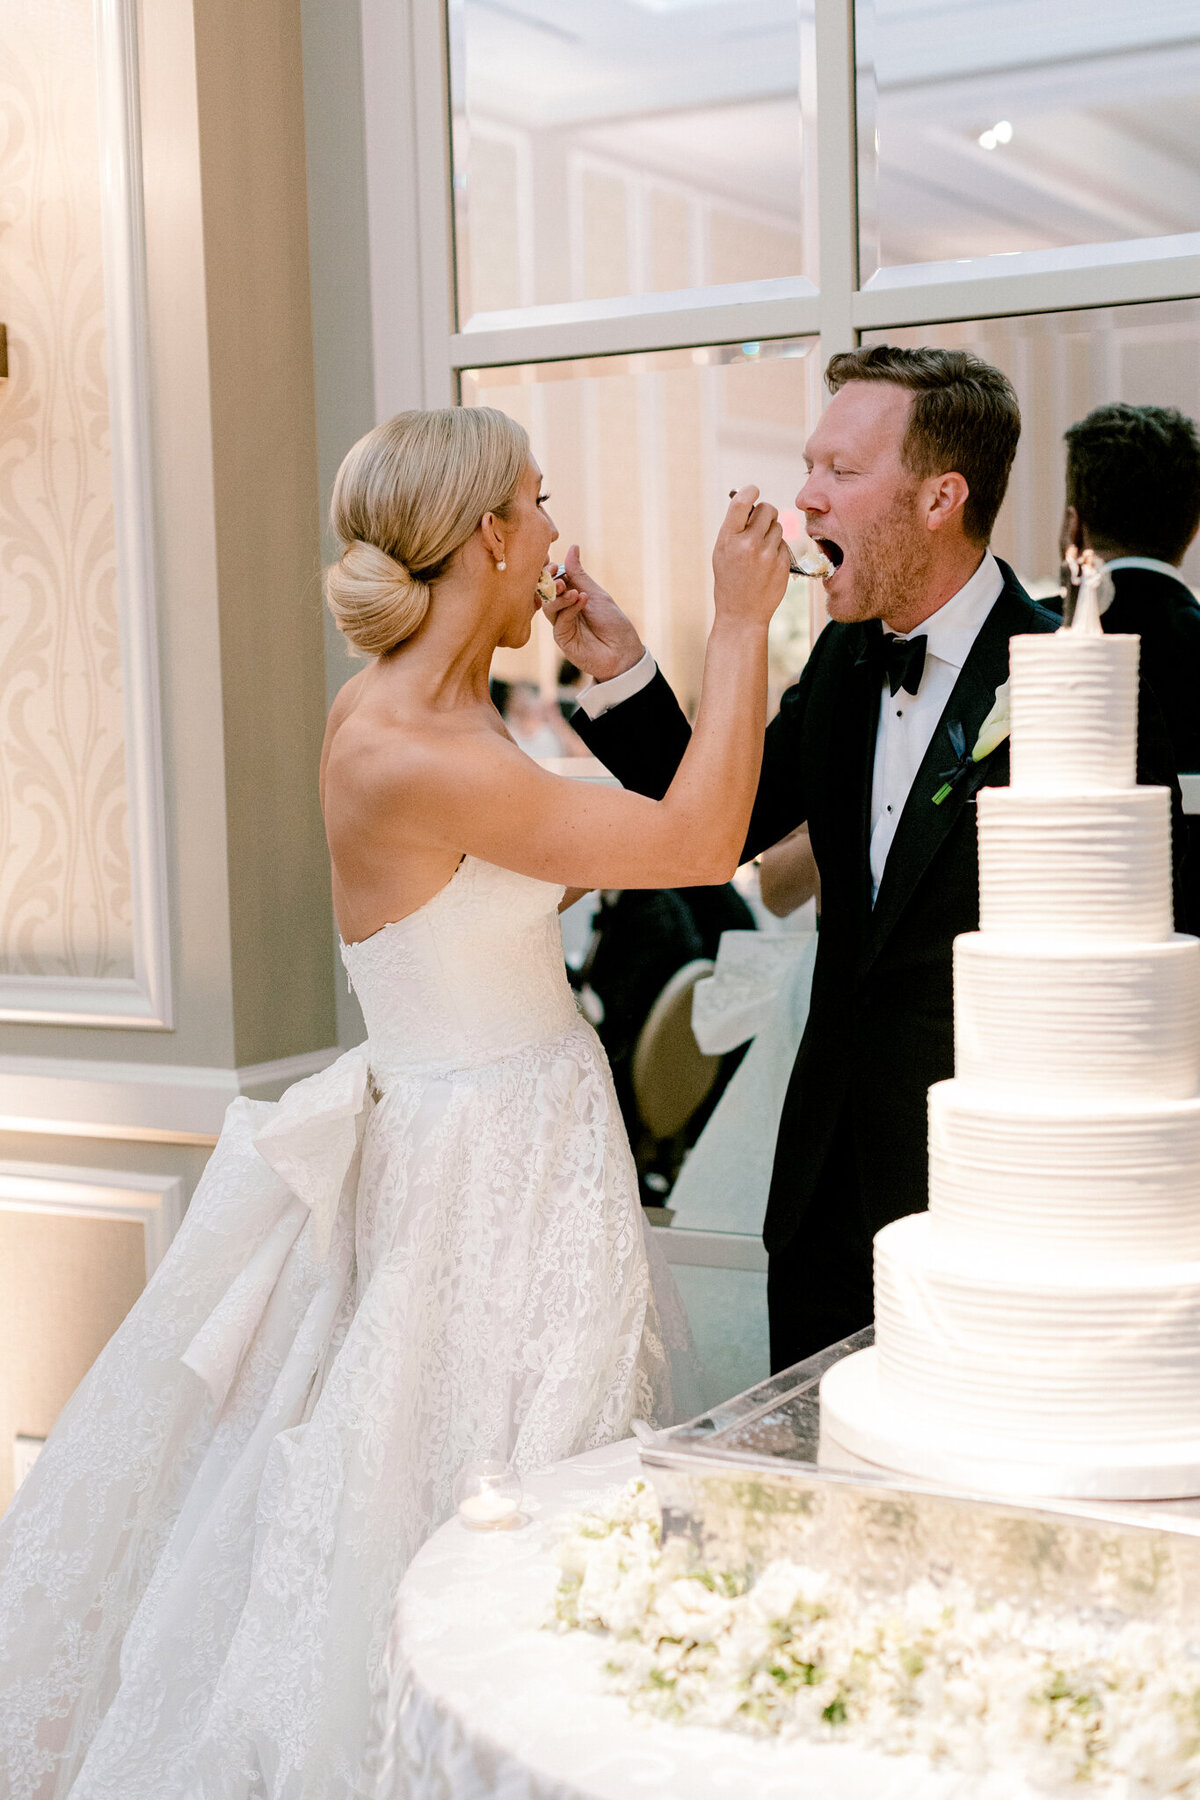 Katelyn & Kyle's Wedding at the Adolphus Hotel | Dallas Wedding Photographer | Sami Kathryn Photography-295